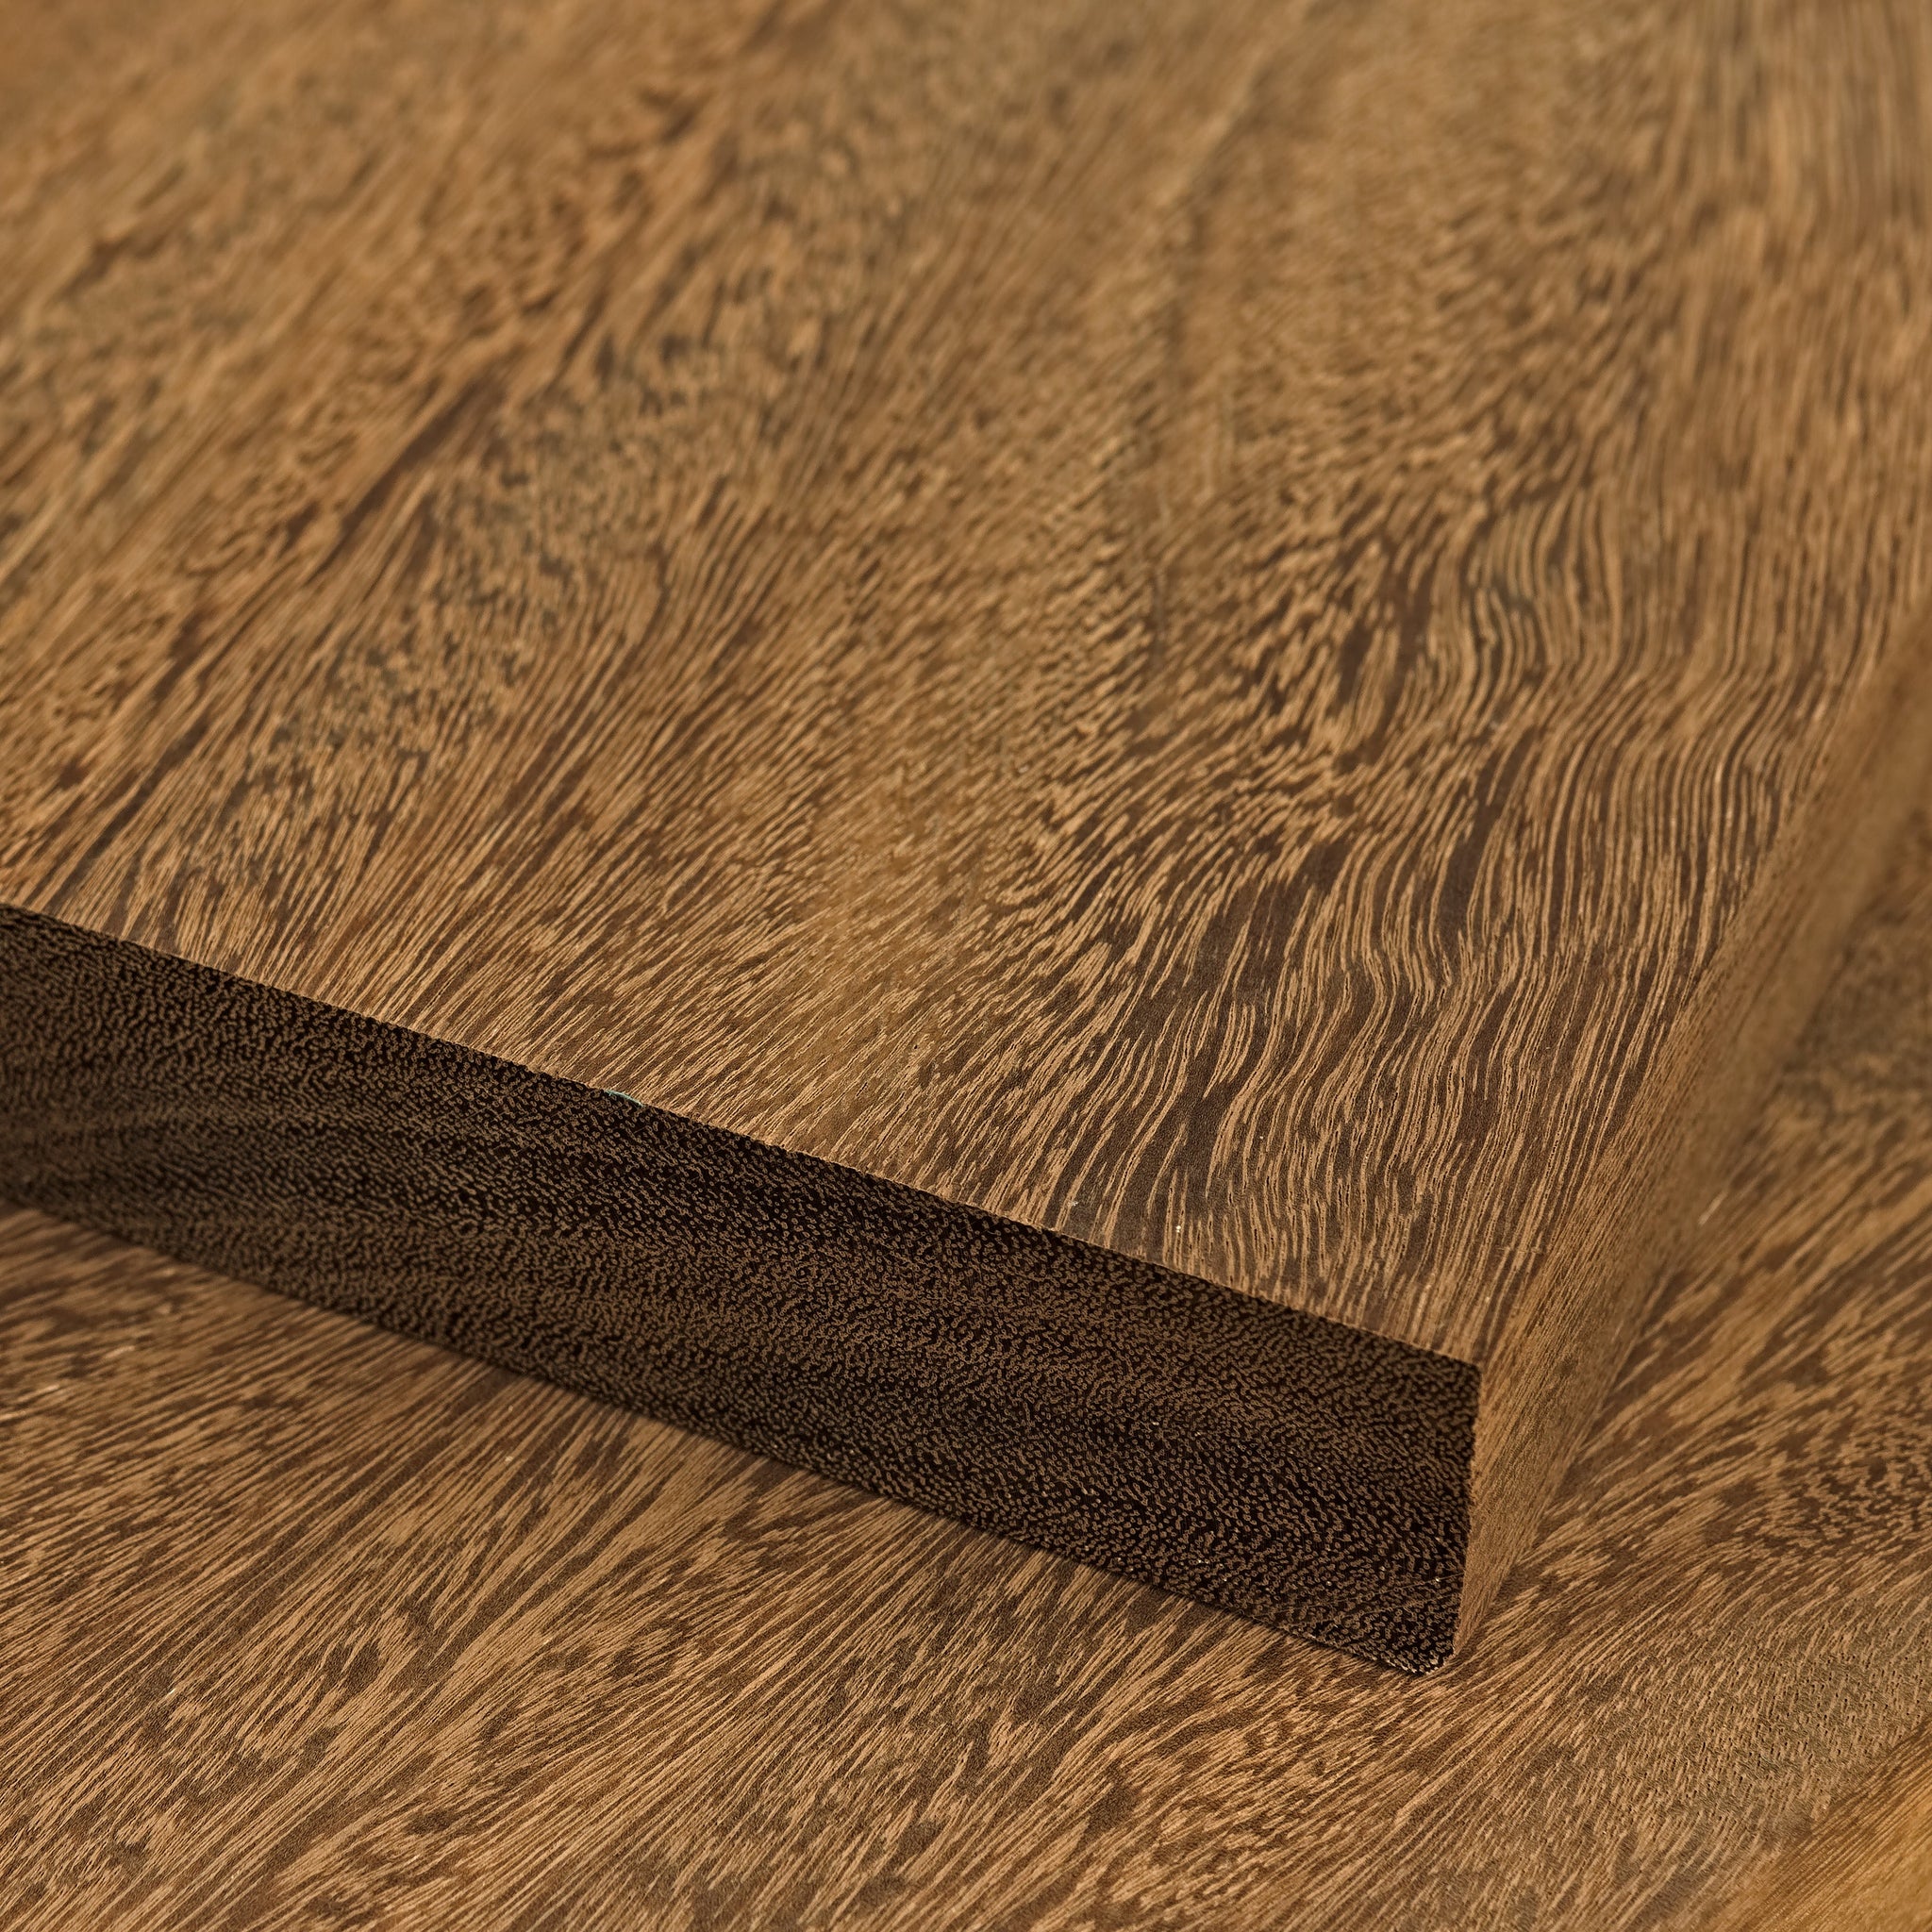 Black Sucupira wood plank ready to ship